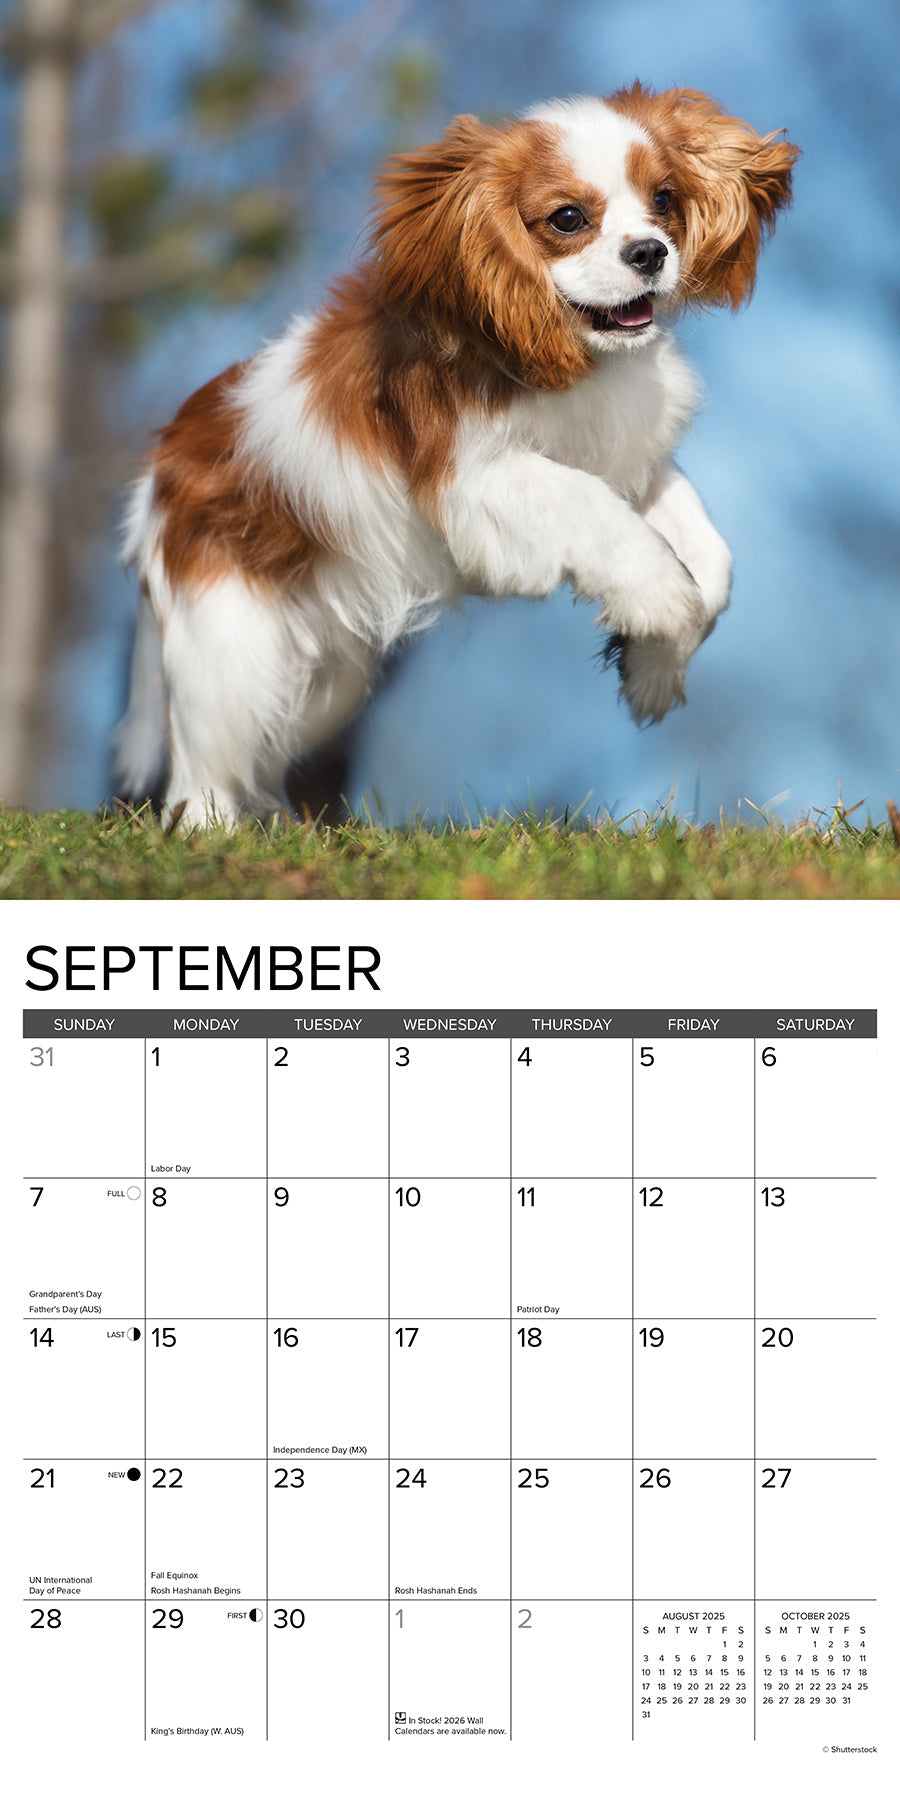 2025 Cavalier King Charles Spaniel Puppies - Square Wall Calendar